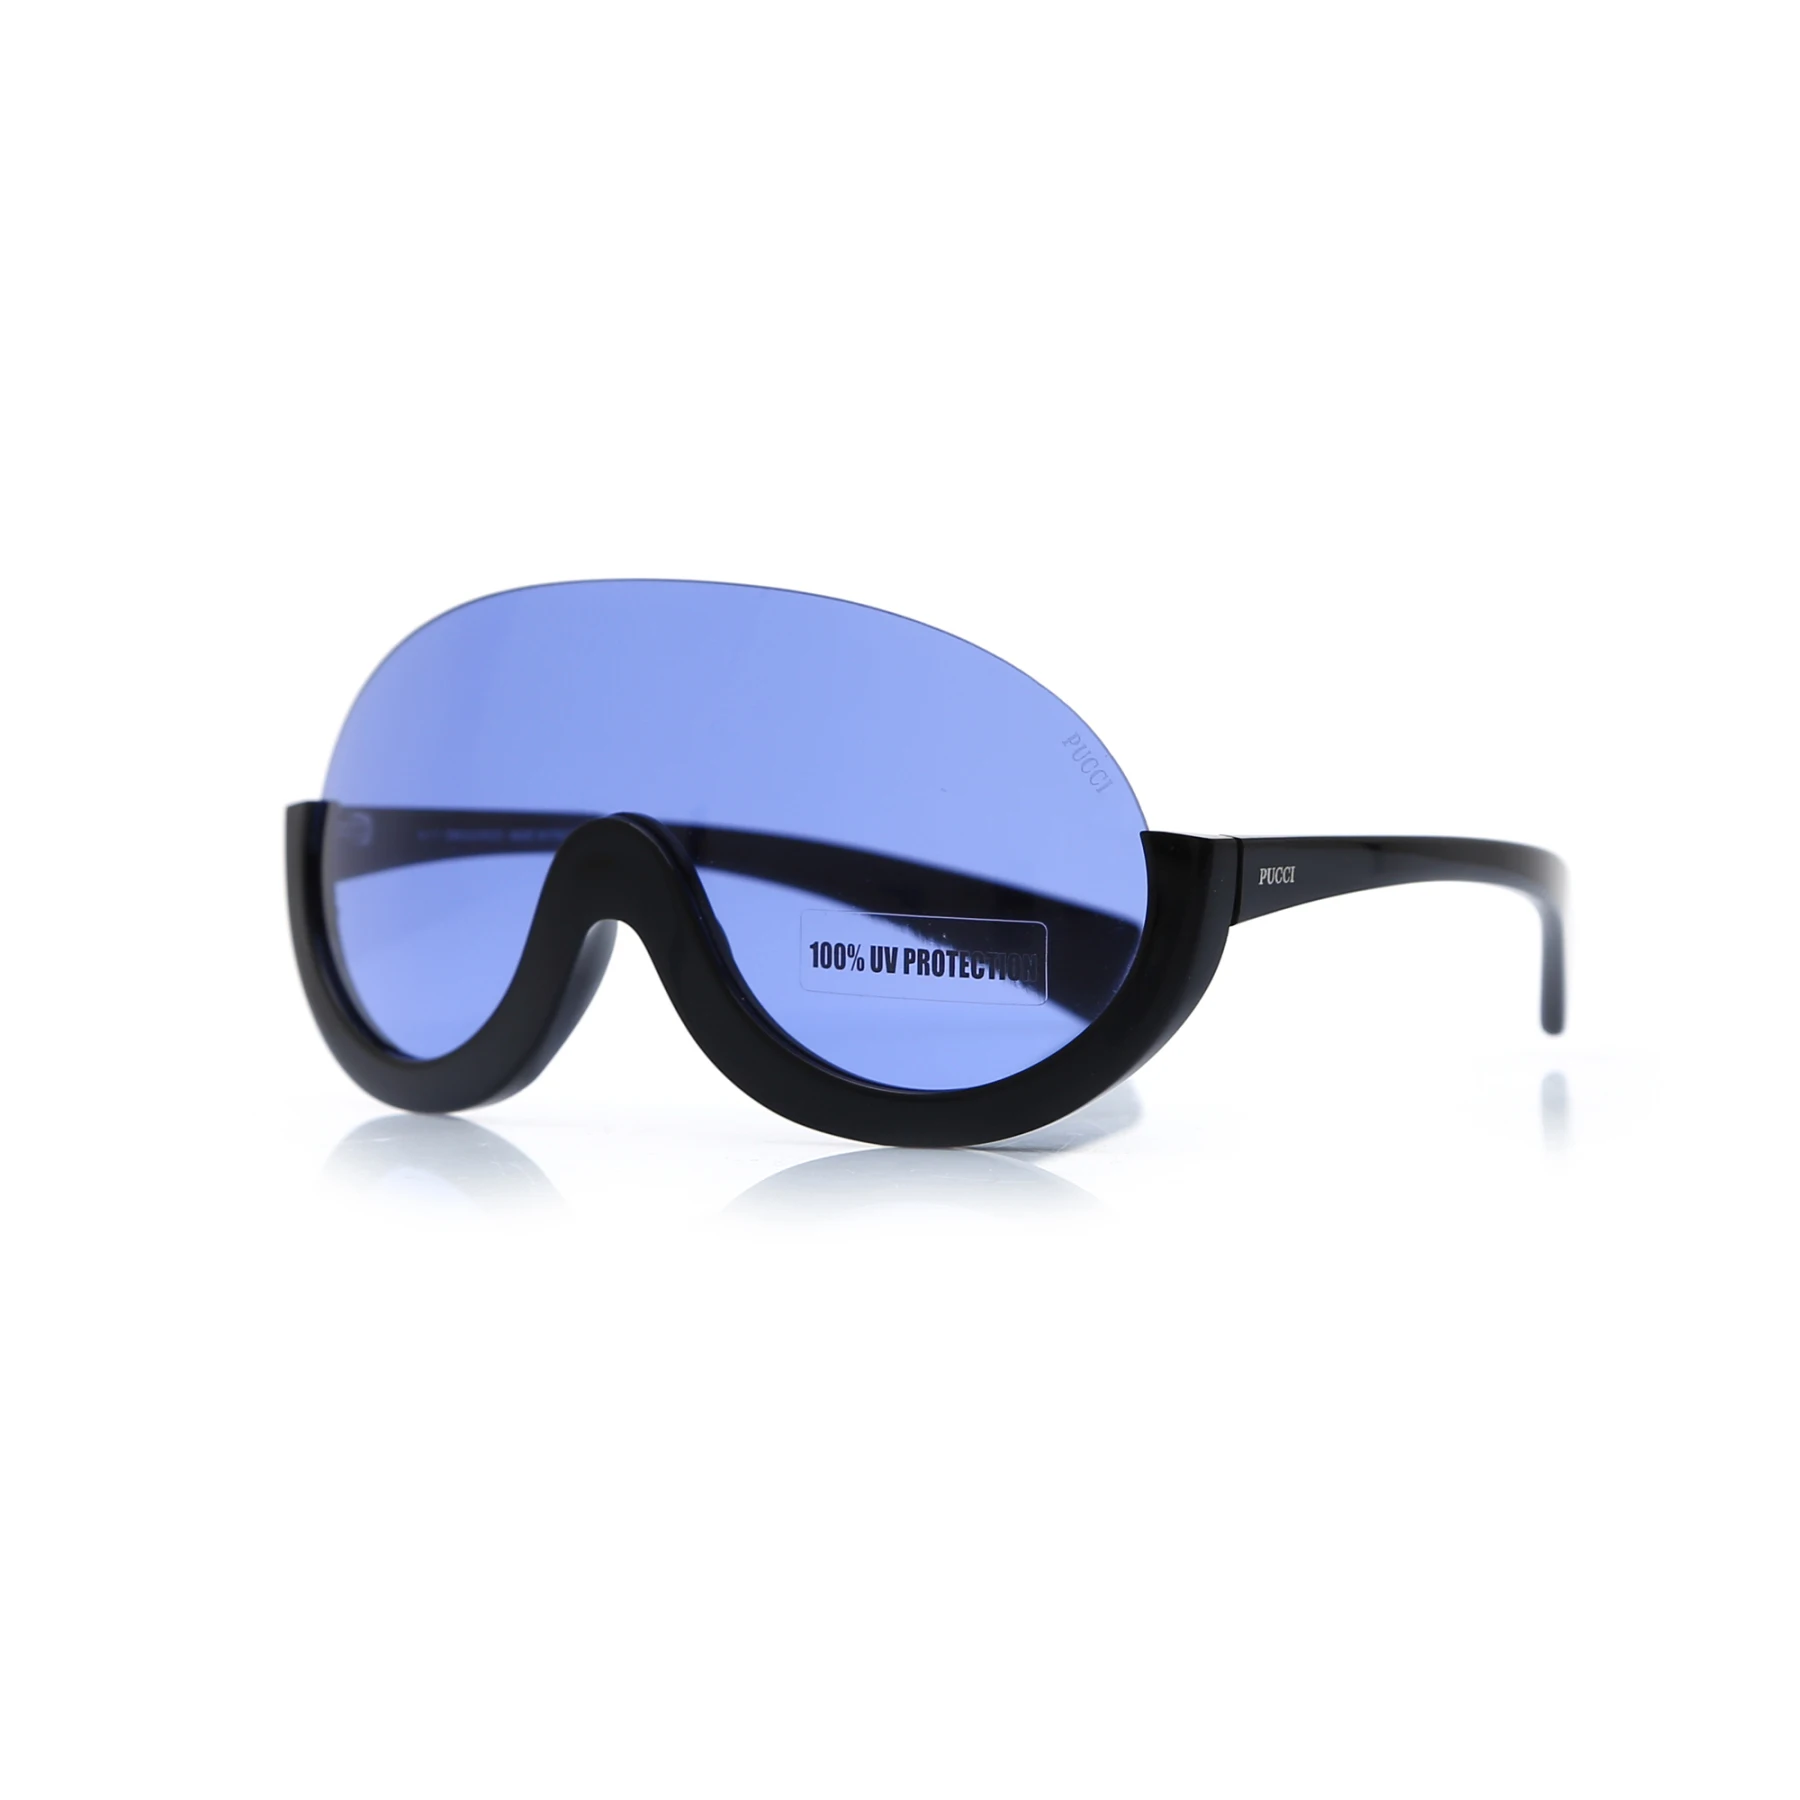 

Women's sunglasses ep 0075 01v unibody black polycarbonate aval 139-16-130 emilio pucci